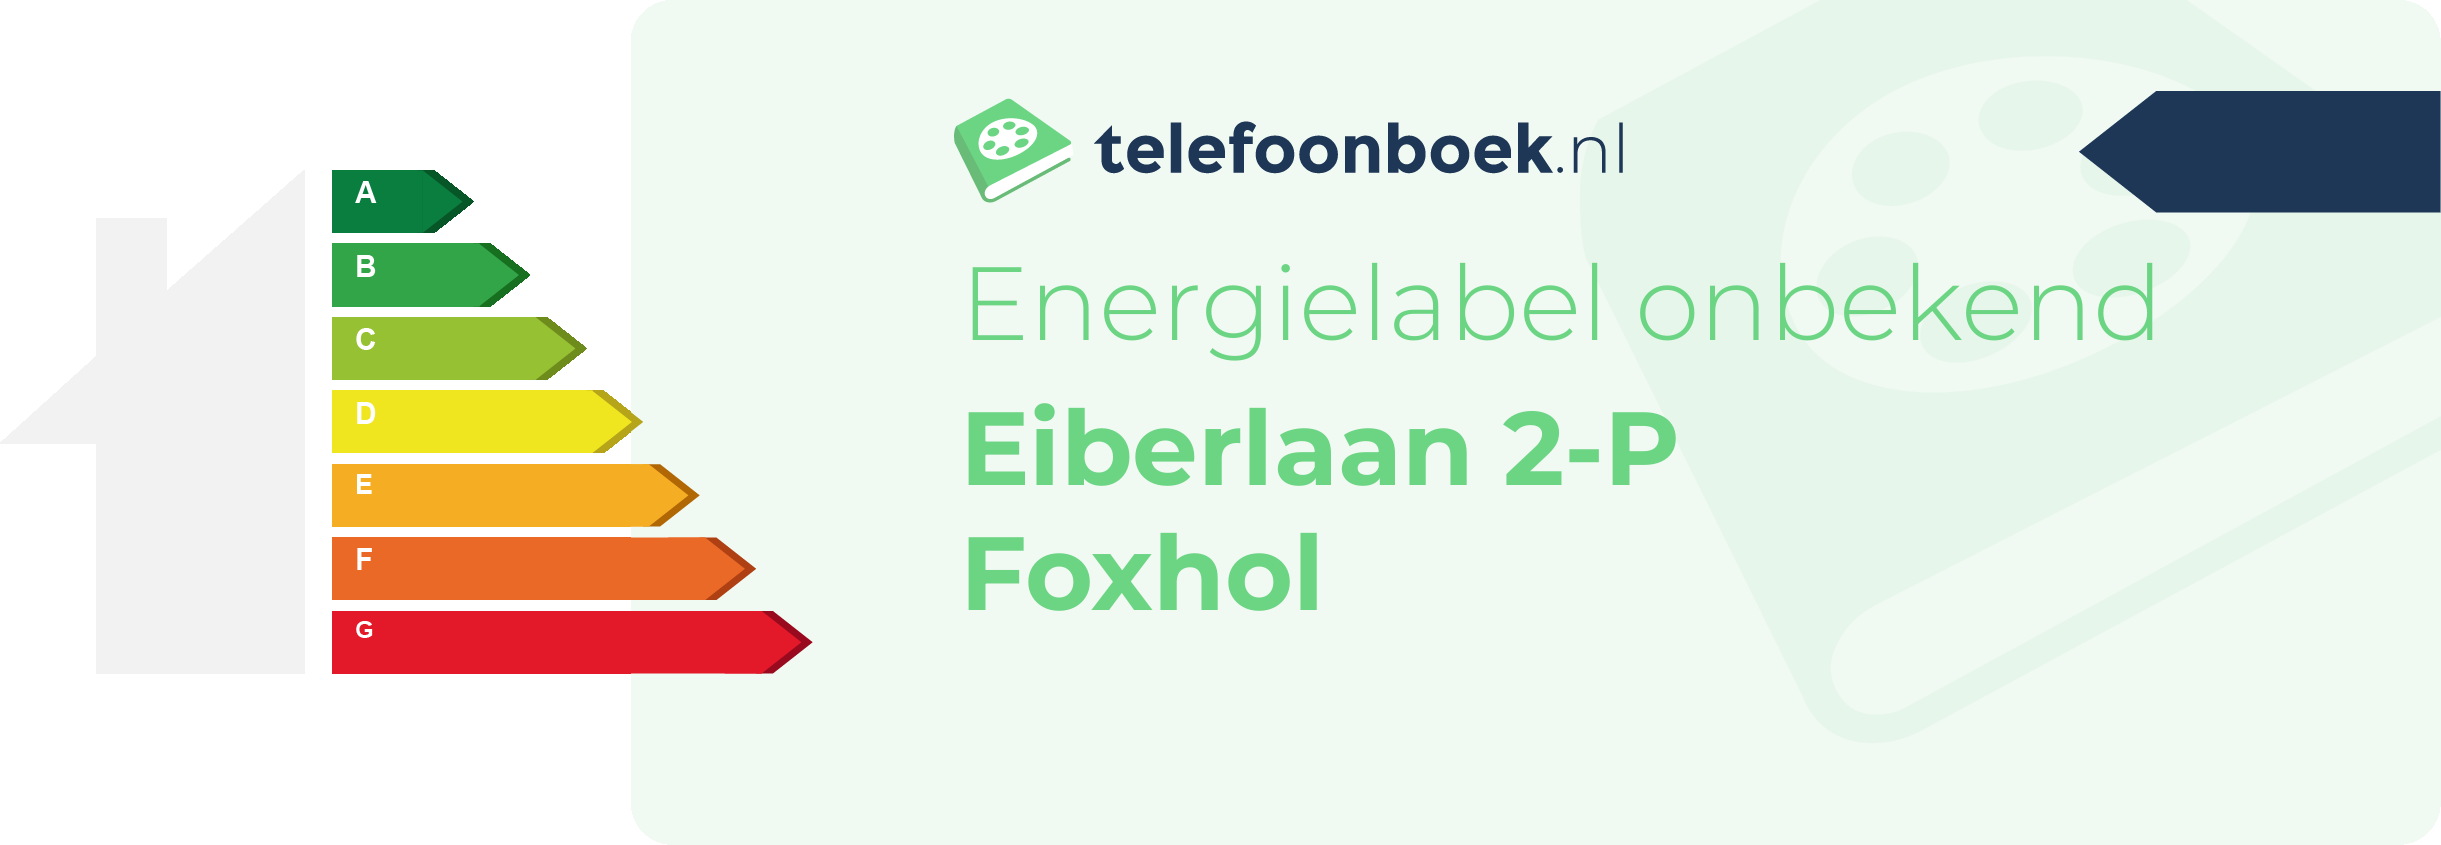 Energielabel Eiberlaan 2-P Foxhol